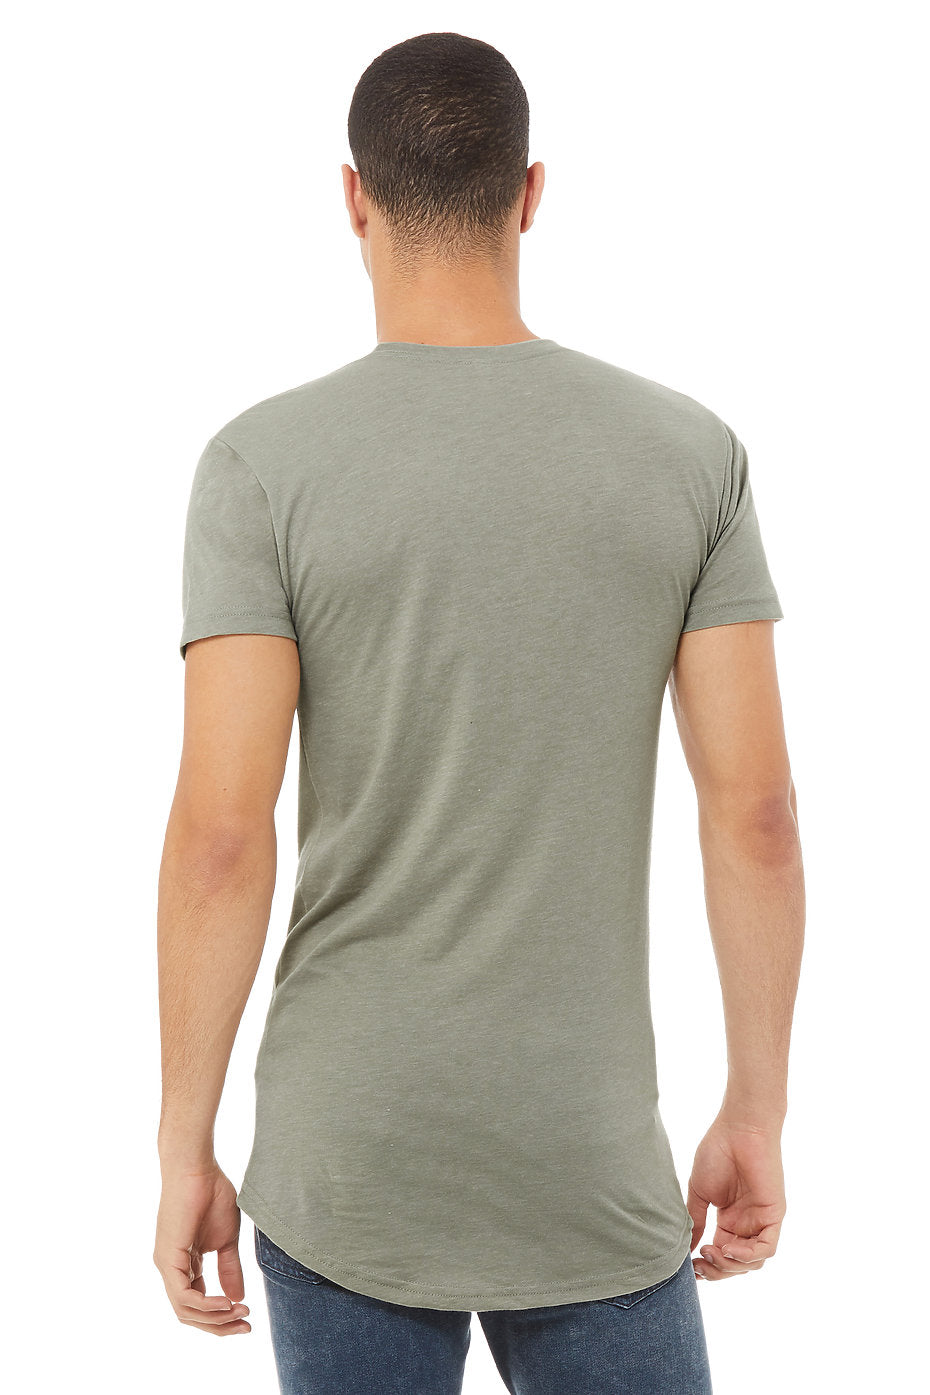 Long Body Urban Shirt aus Baumwolle